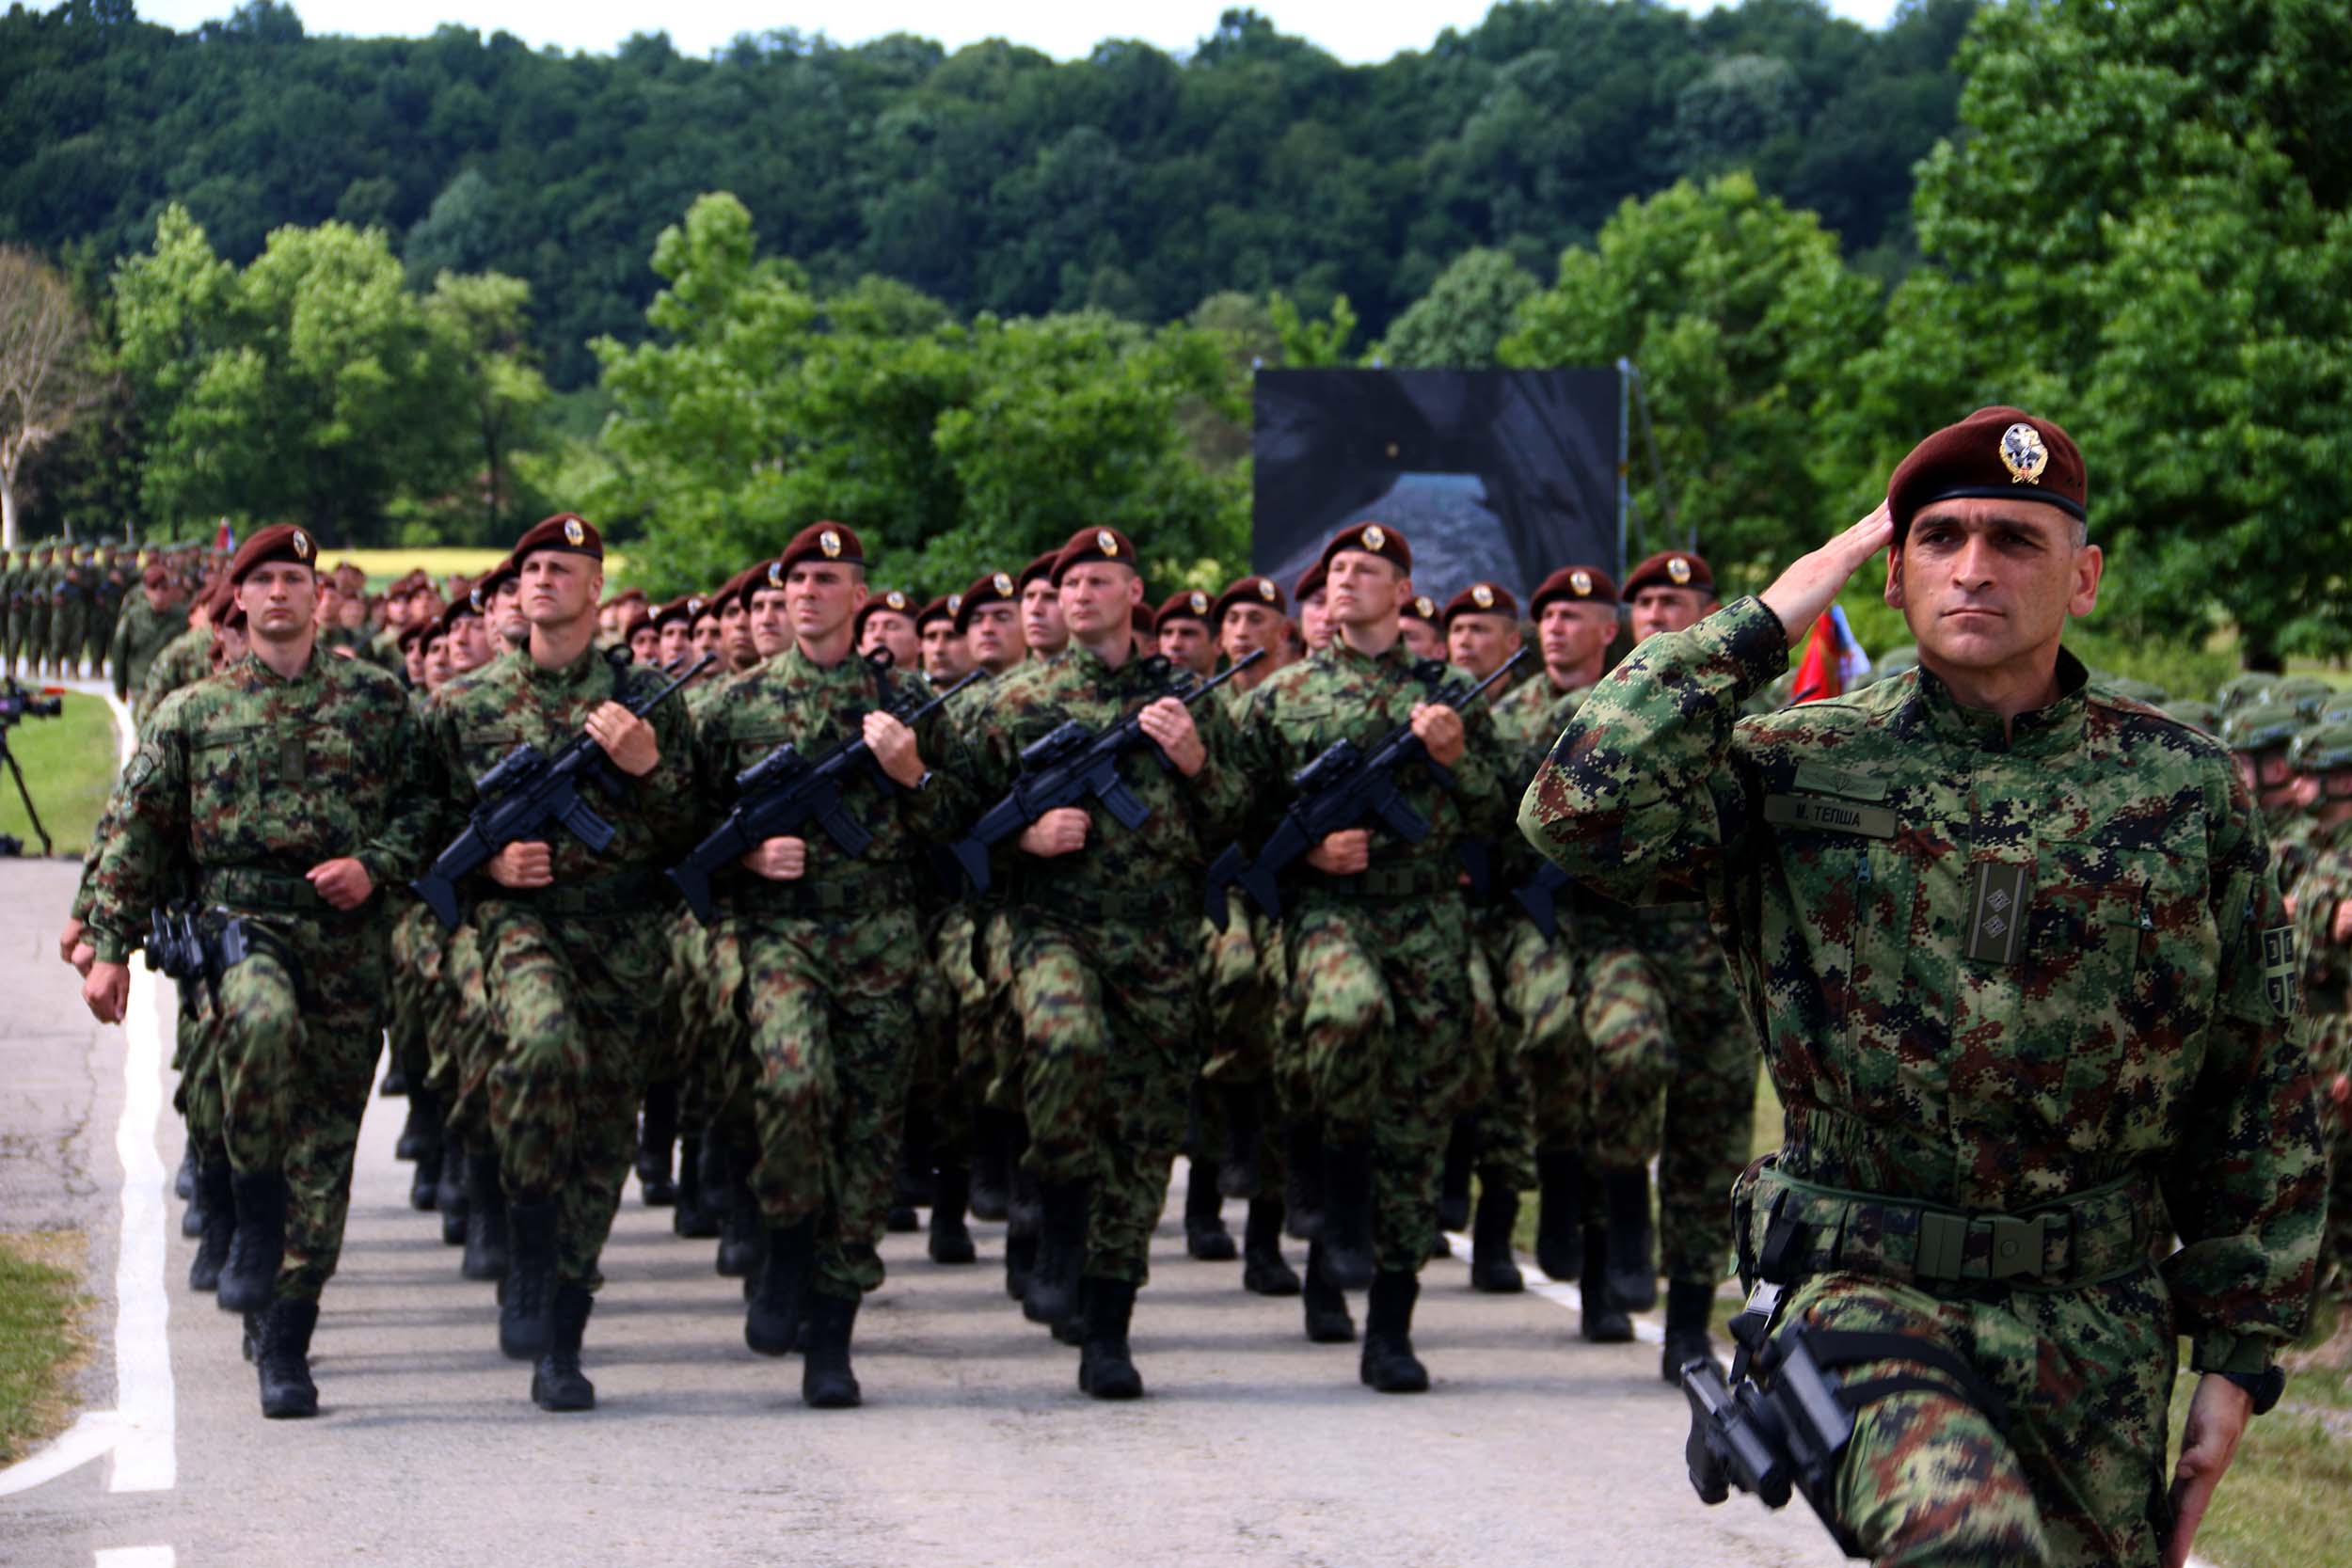 21 бригада сво. 72 Бригада. Застава бригади имени Святого Георгия. 72 Бригада Орр. Специальная бригада Сербии.